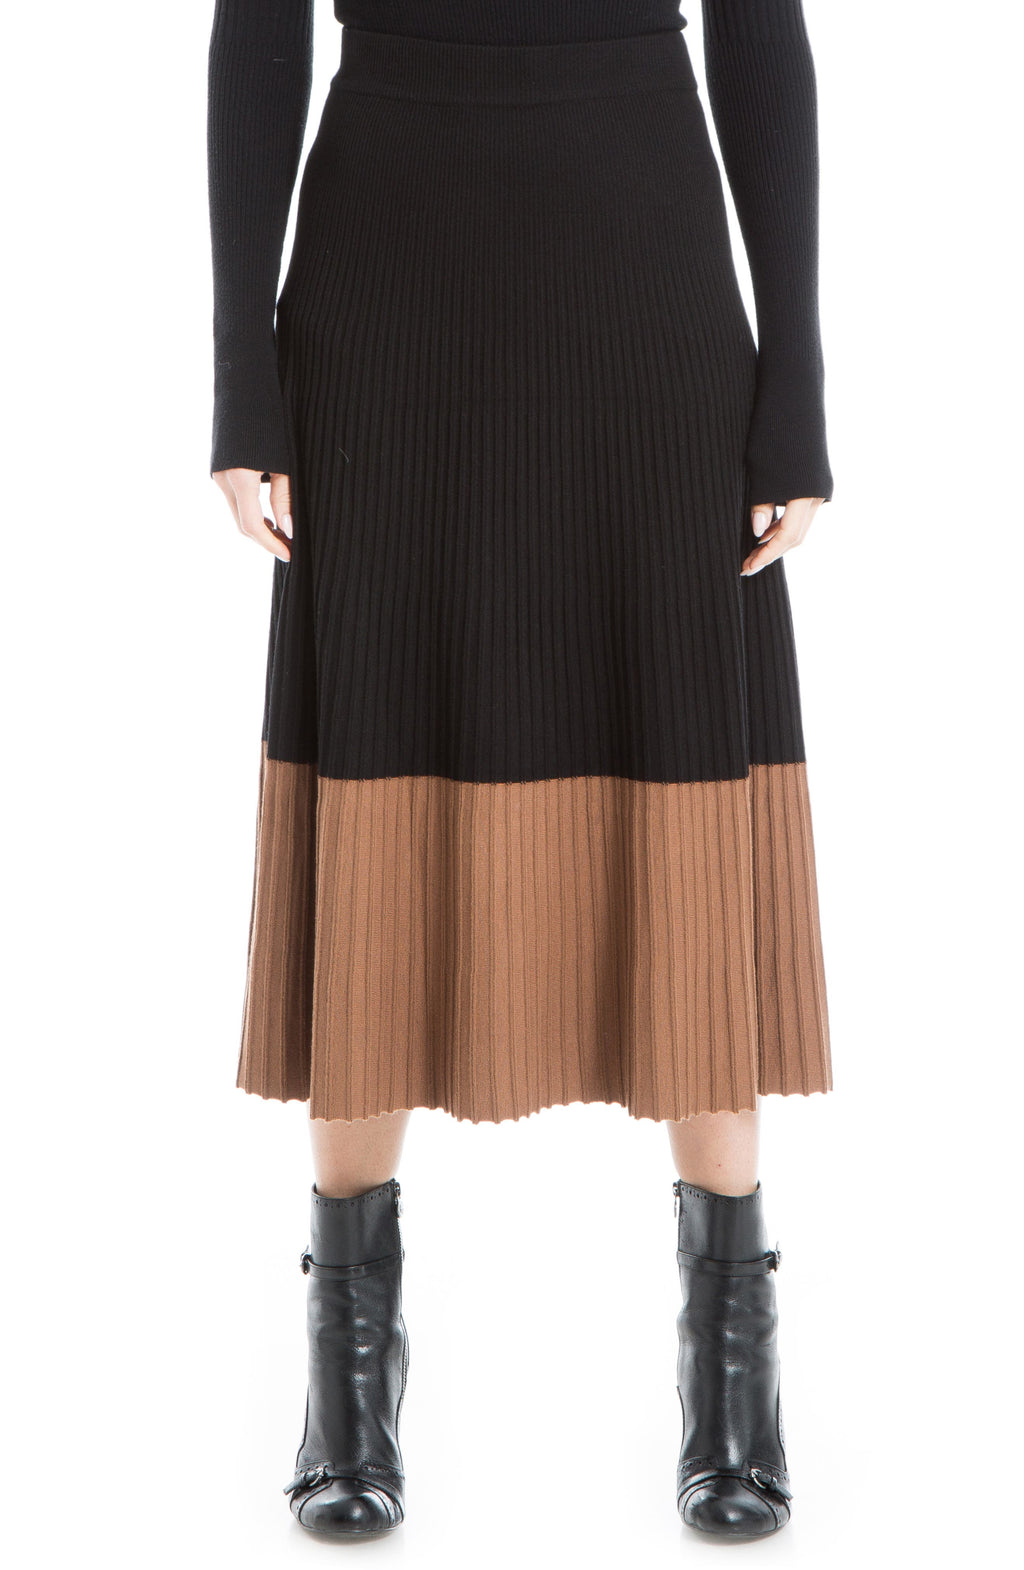 MAXSTUDIO Pleated Colorblock Knit Skirt, Main, color, BLACK/ VICUNA